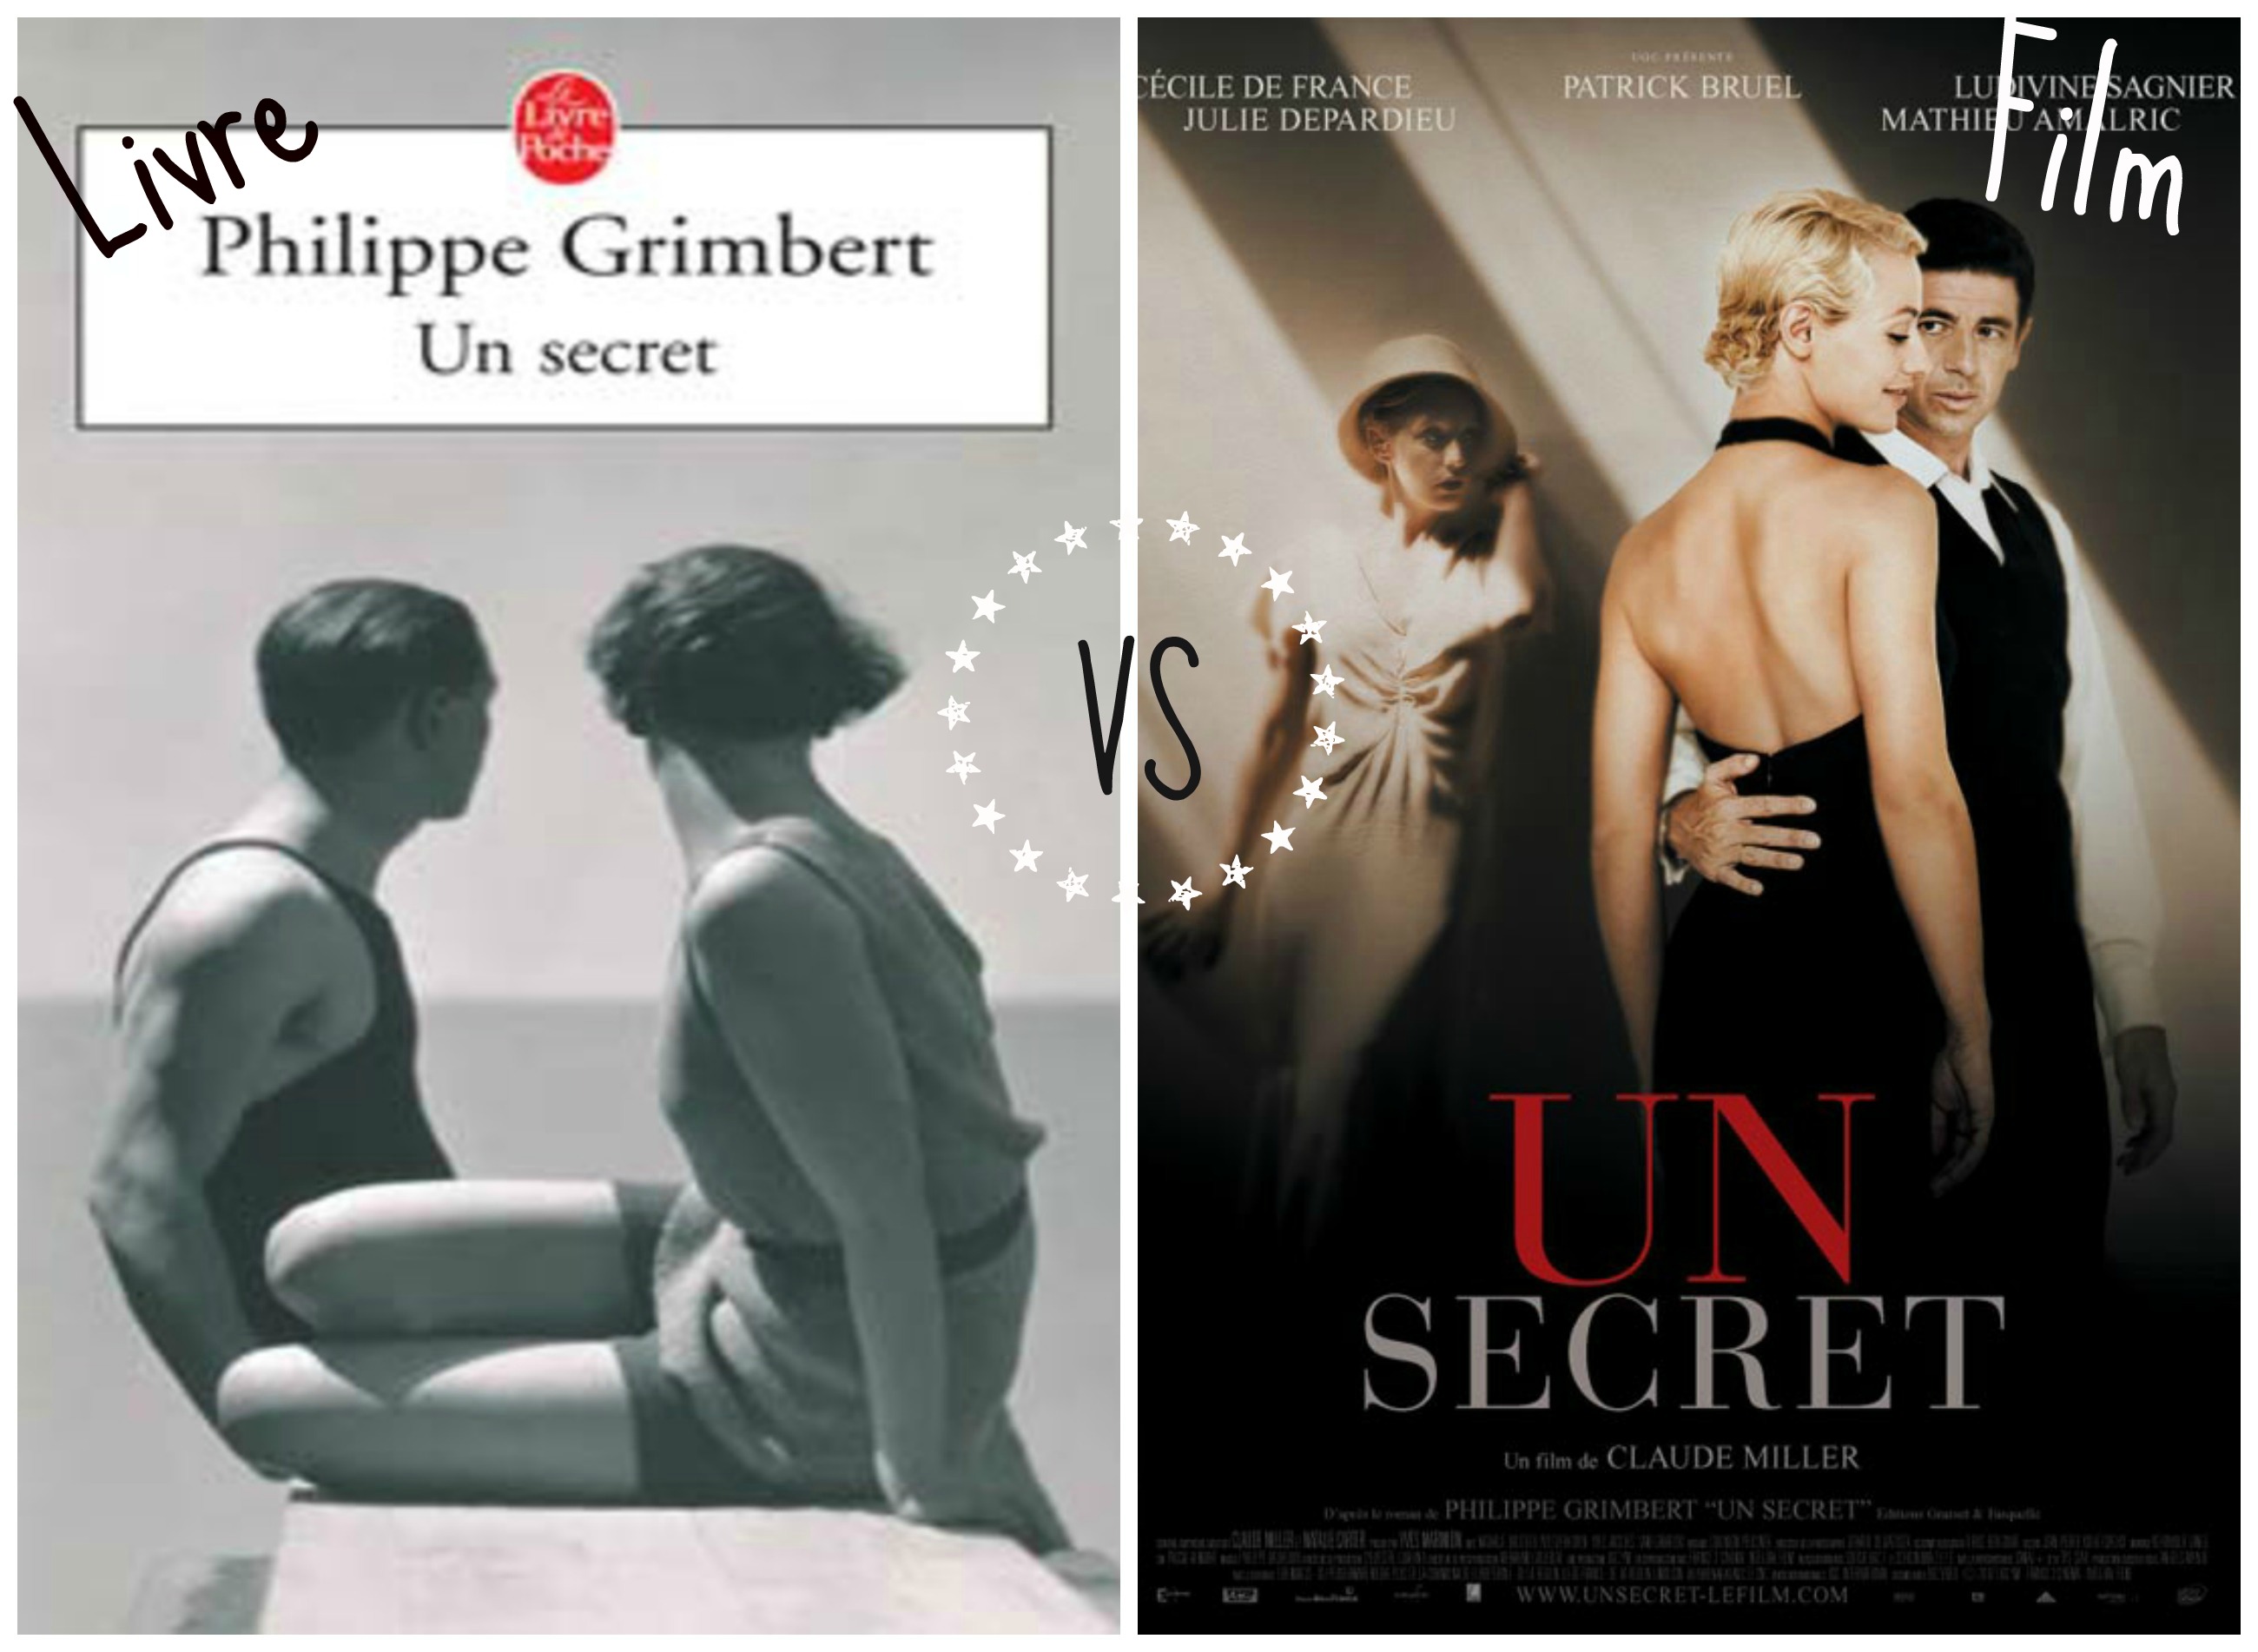 Livre VS Film II] Un secret - No-more-drama